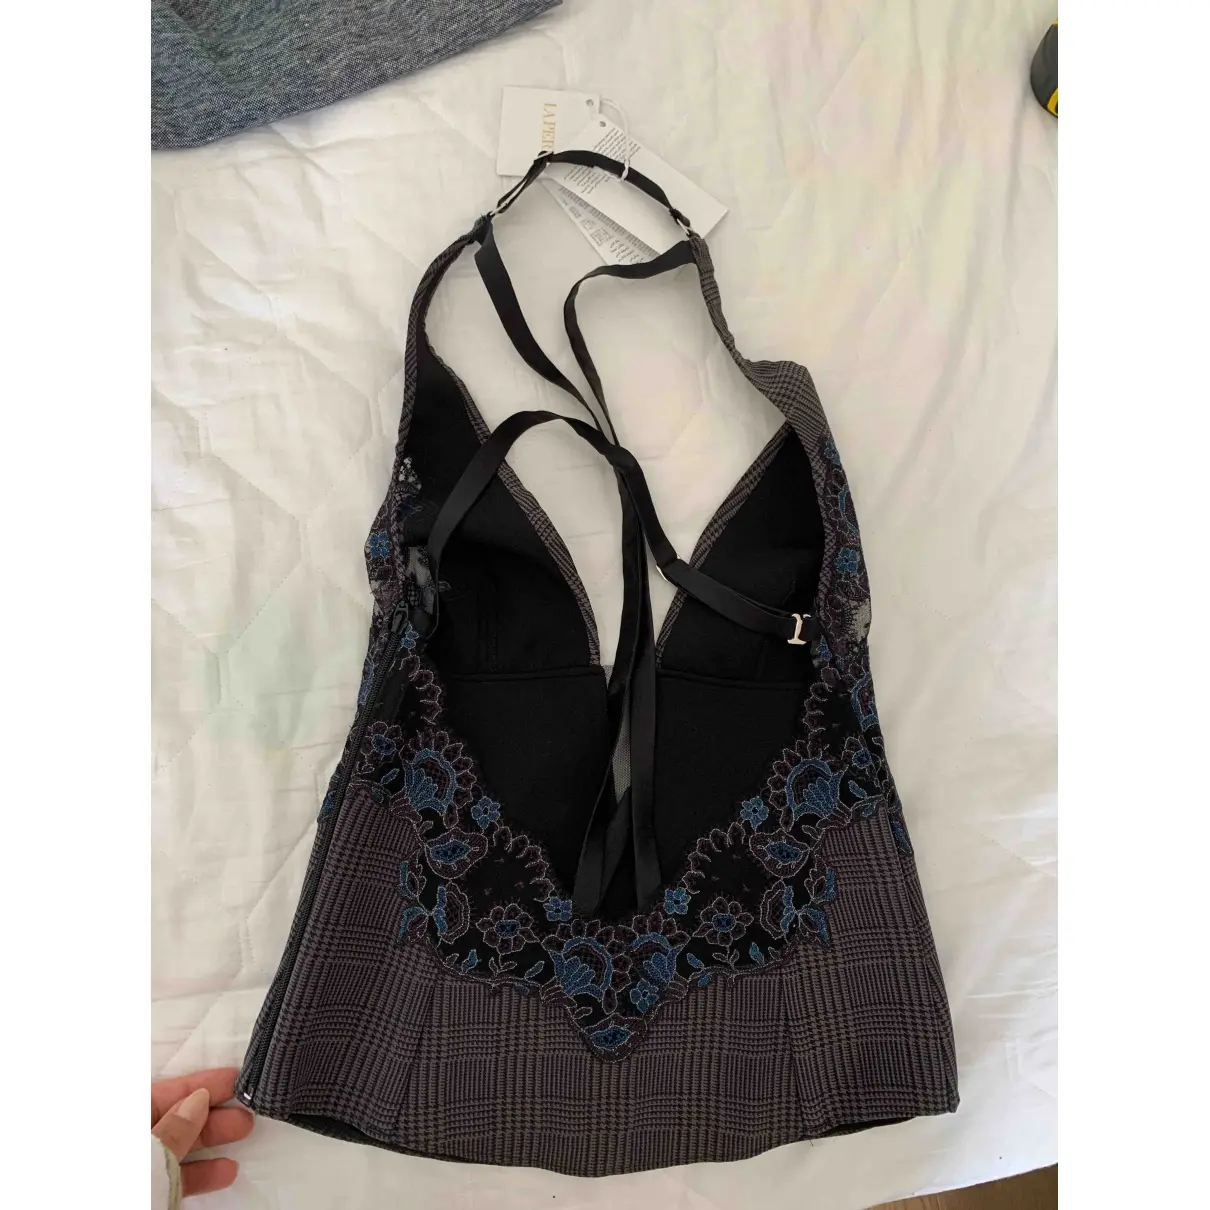 Buy La Perla Silk corset online